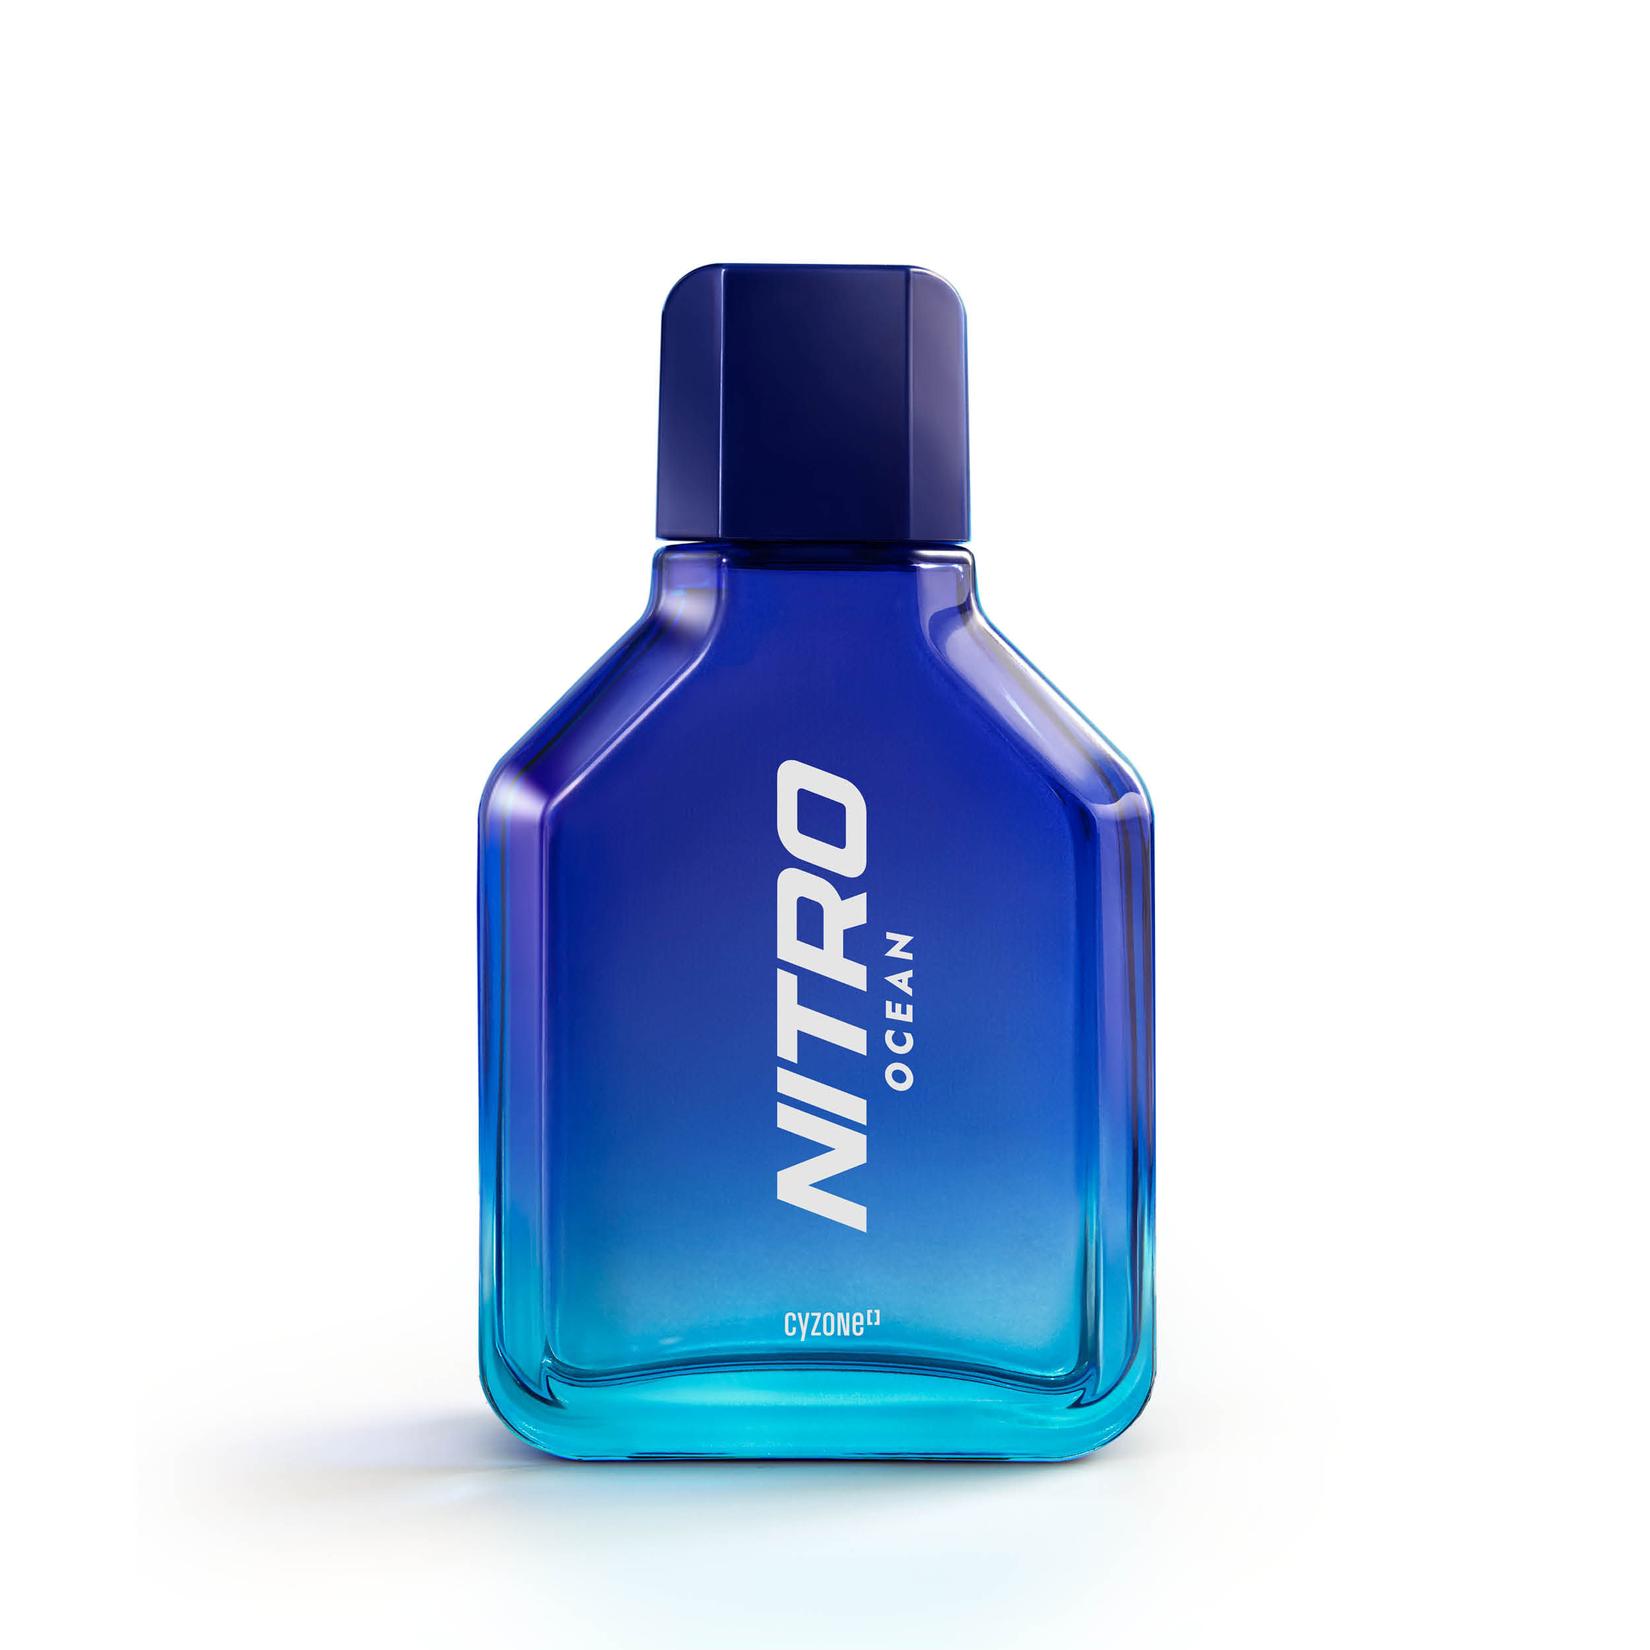 Oferta de Perfume de Hombre Nitro Ocean, 90 ml por $79900 en Cyzone